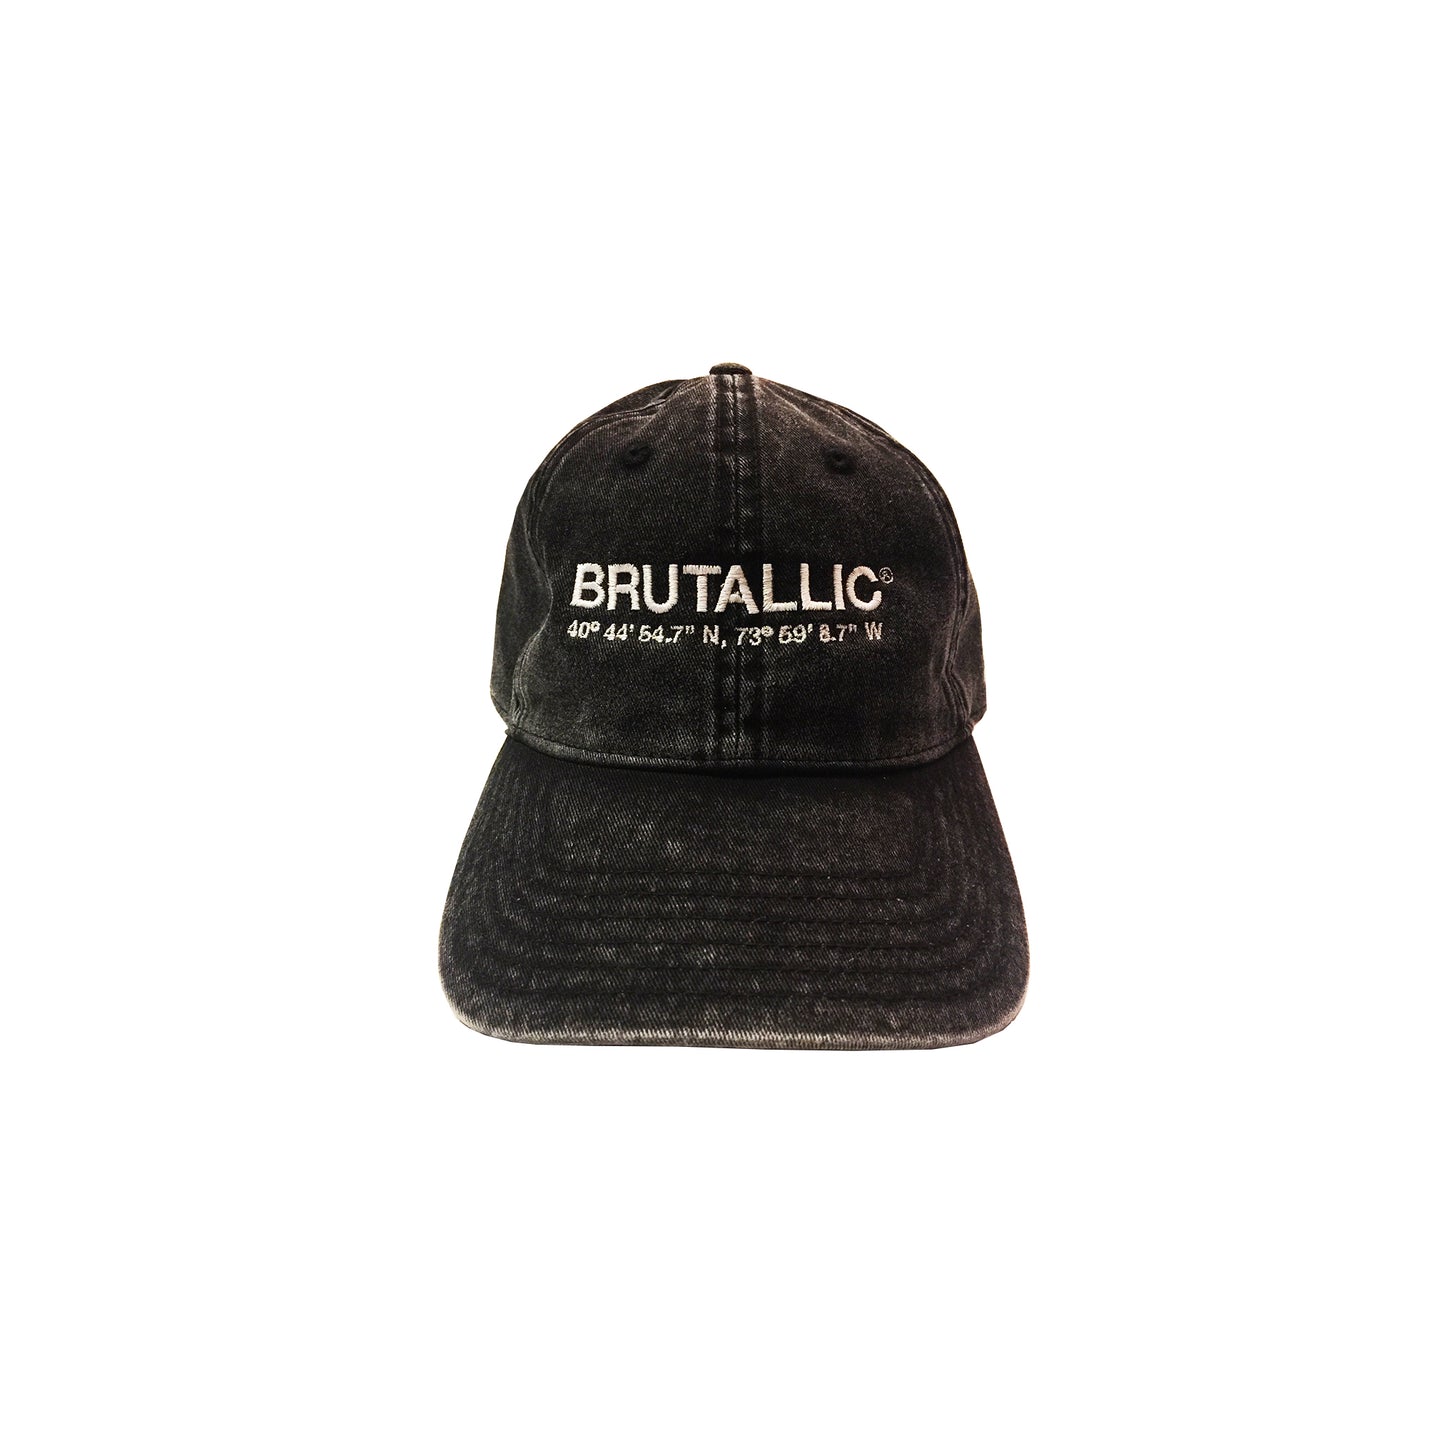 Brutallic Streetwear nyc brand denim hats dad hats independent